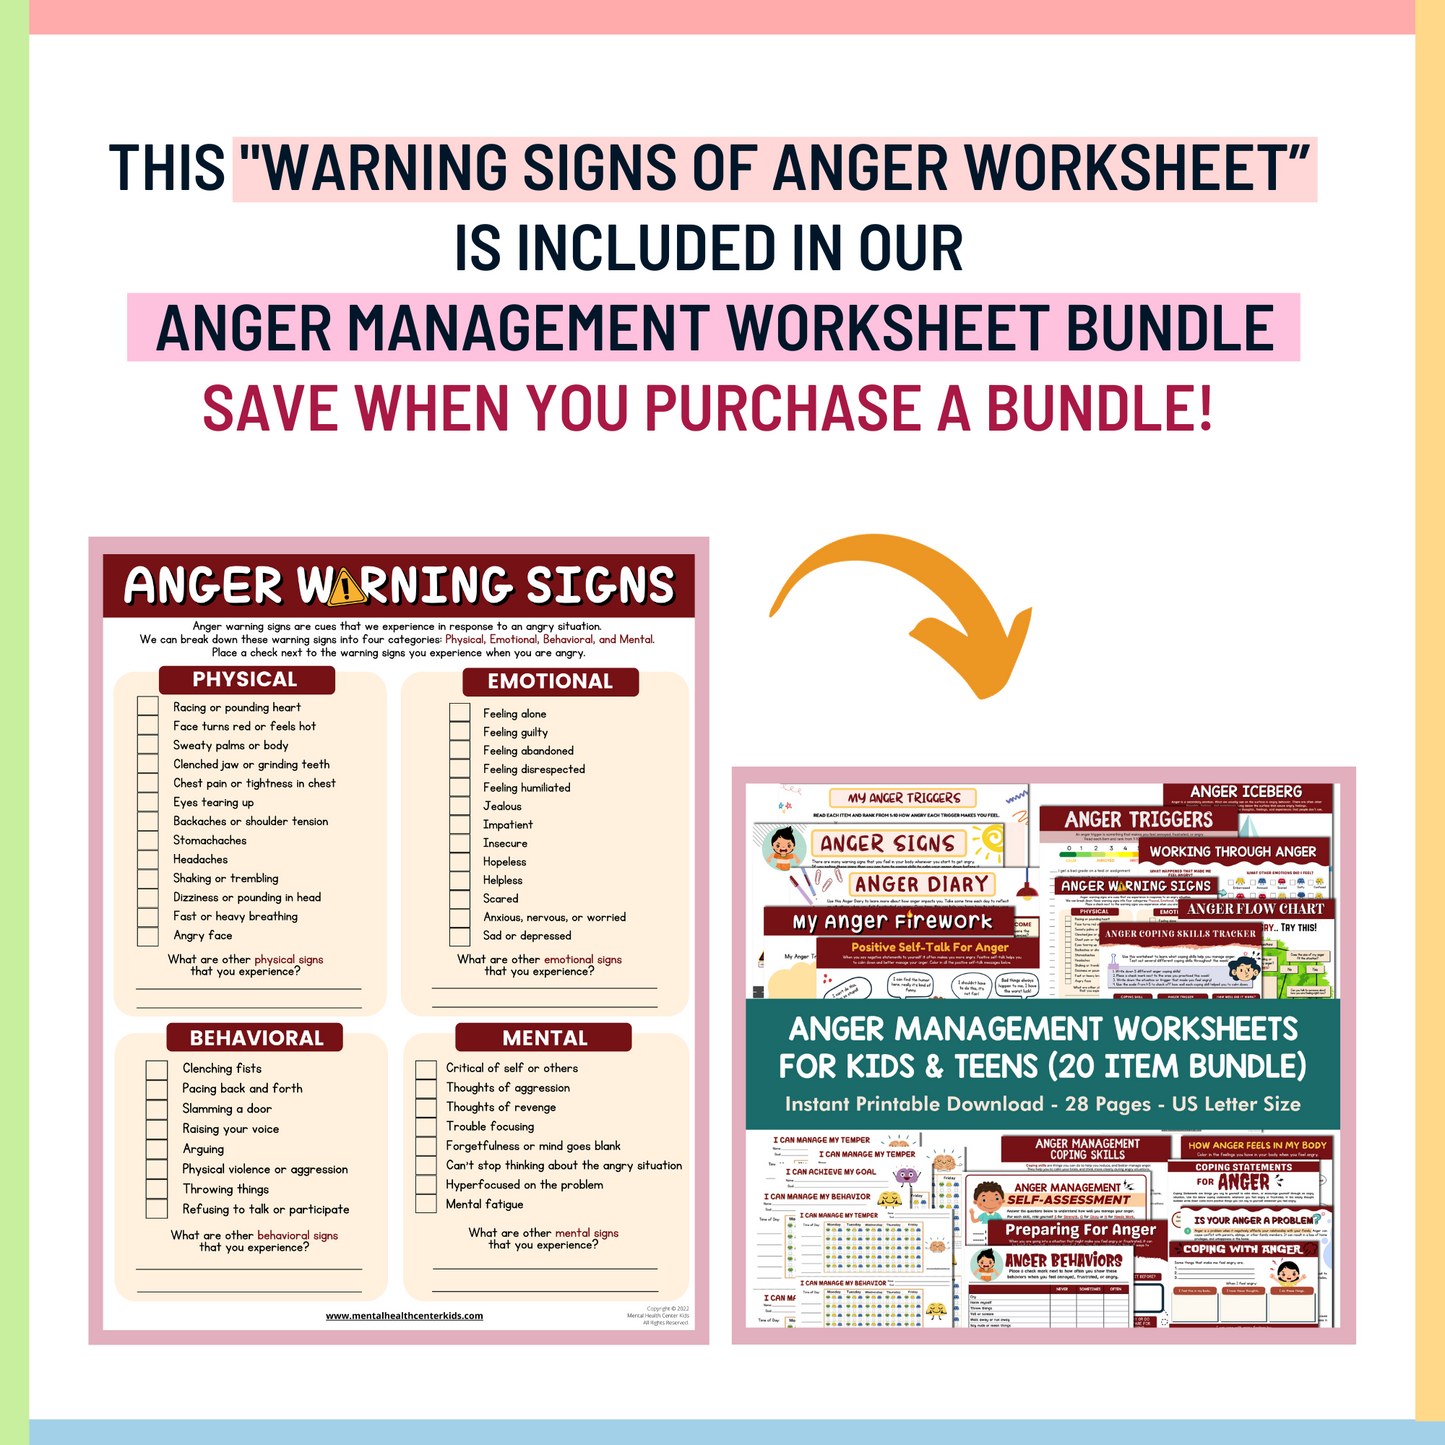 Warning Signs of Anger